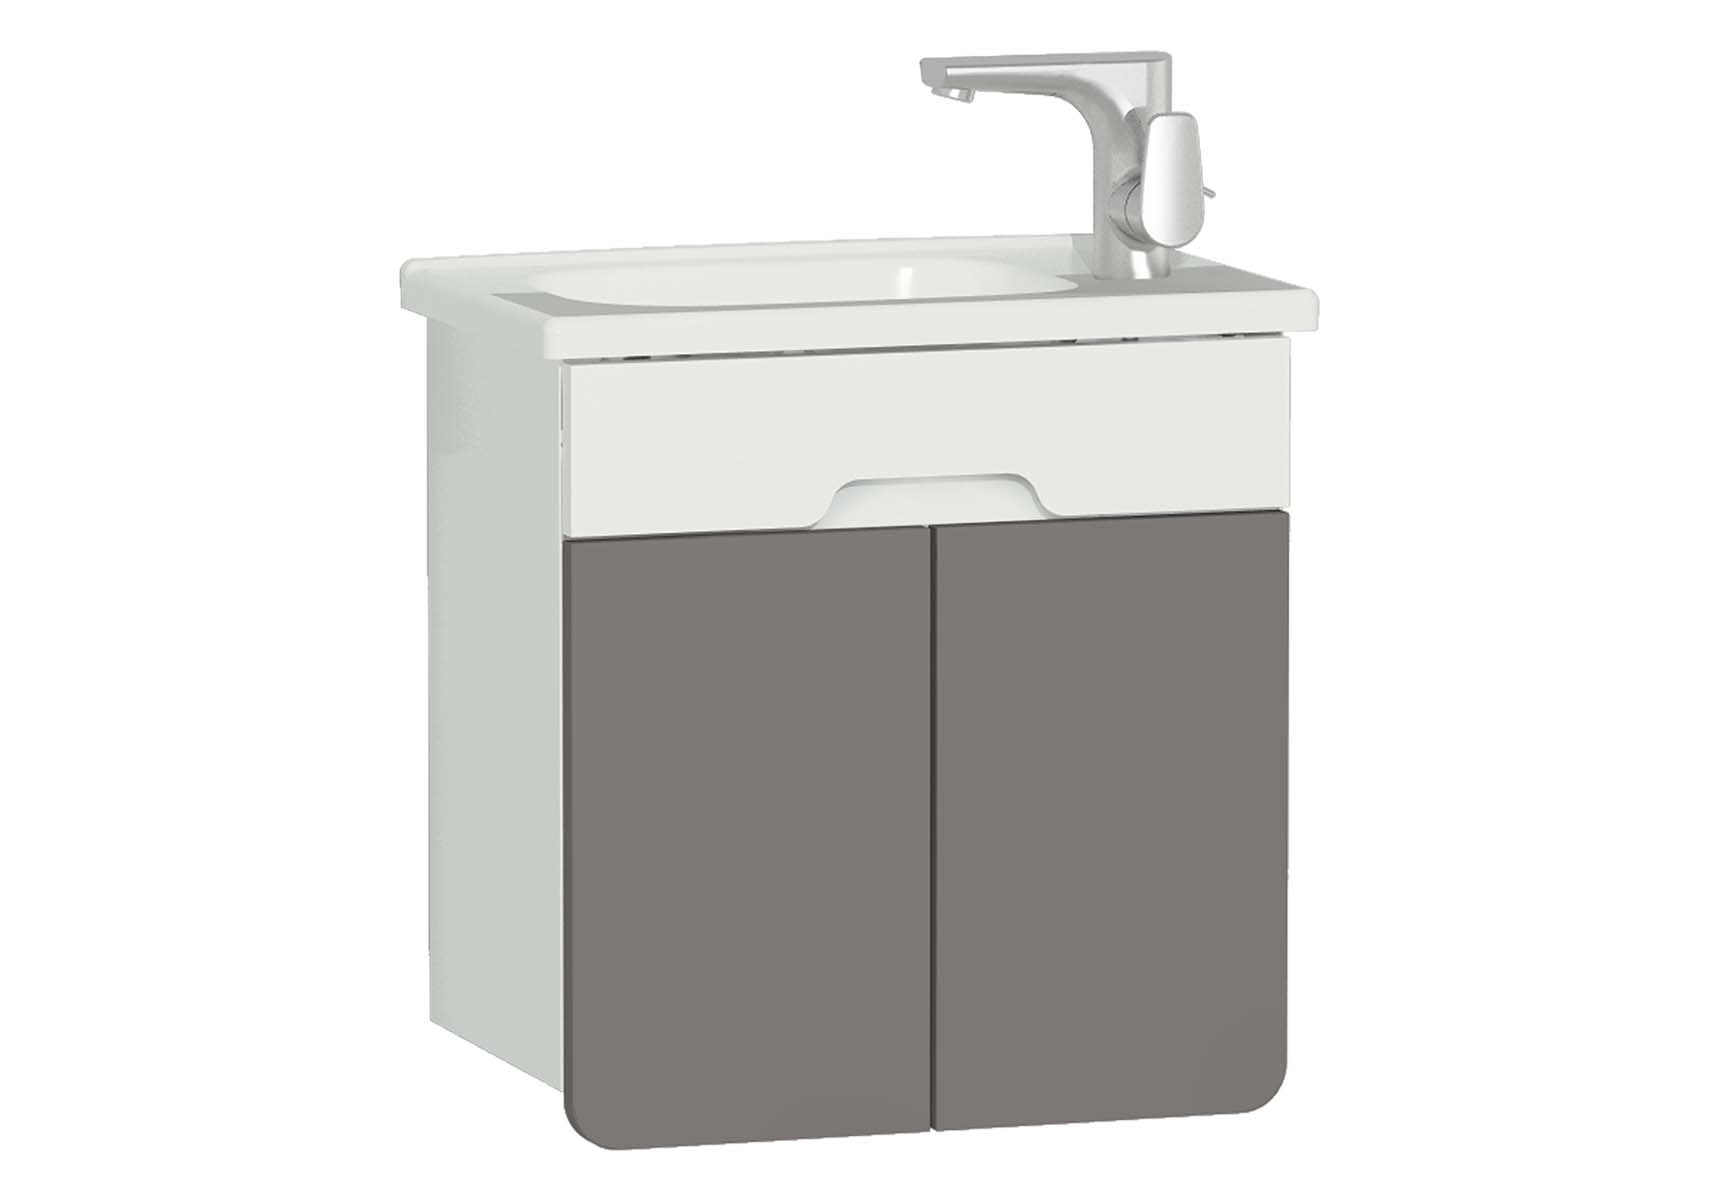 D-Light Washbasin Unit, 50 cm, Matte White & Mink